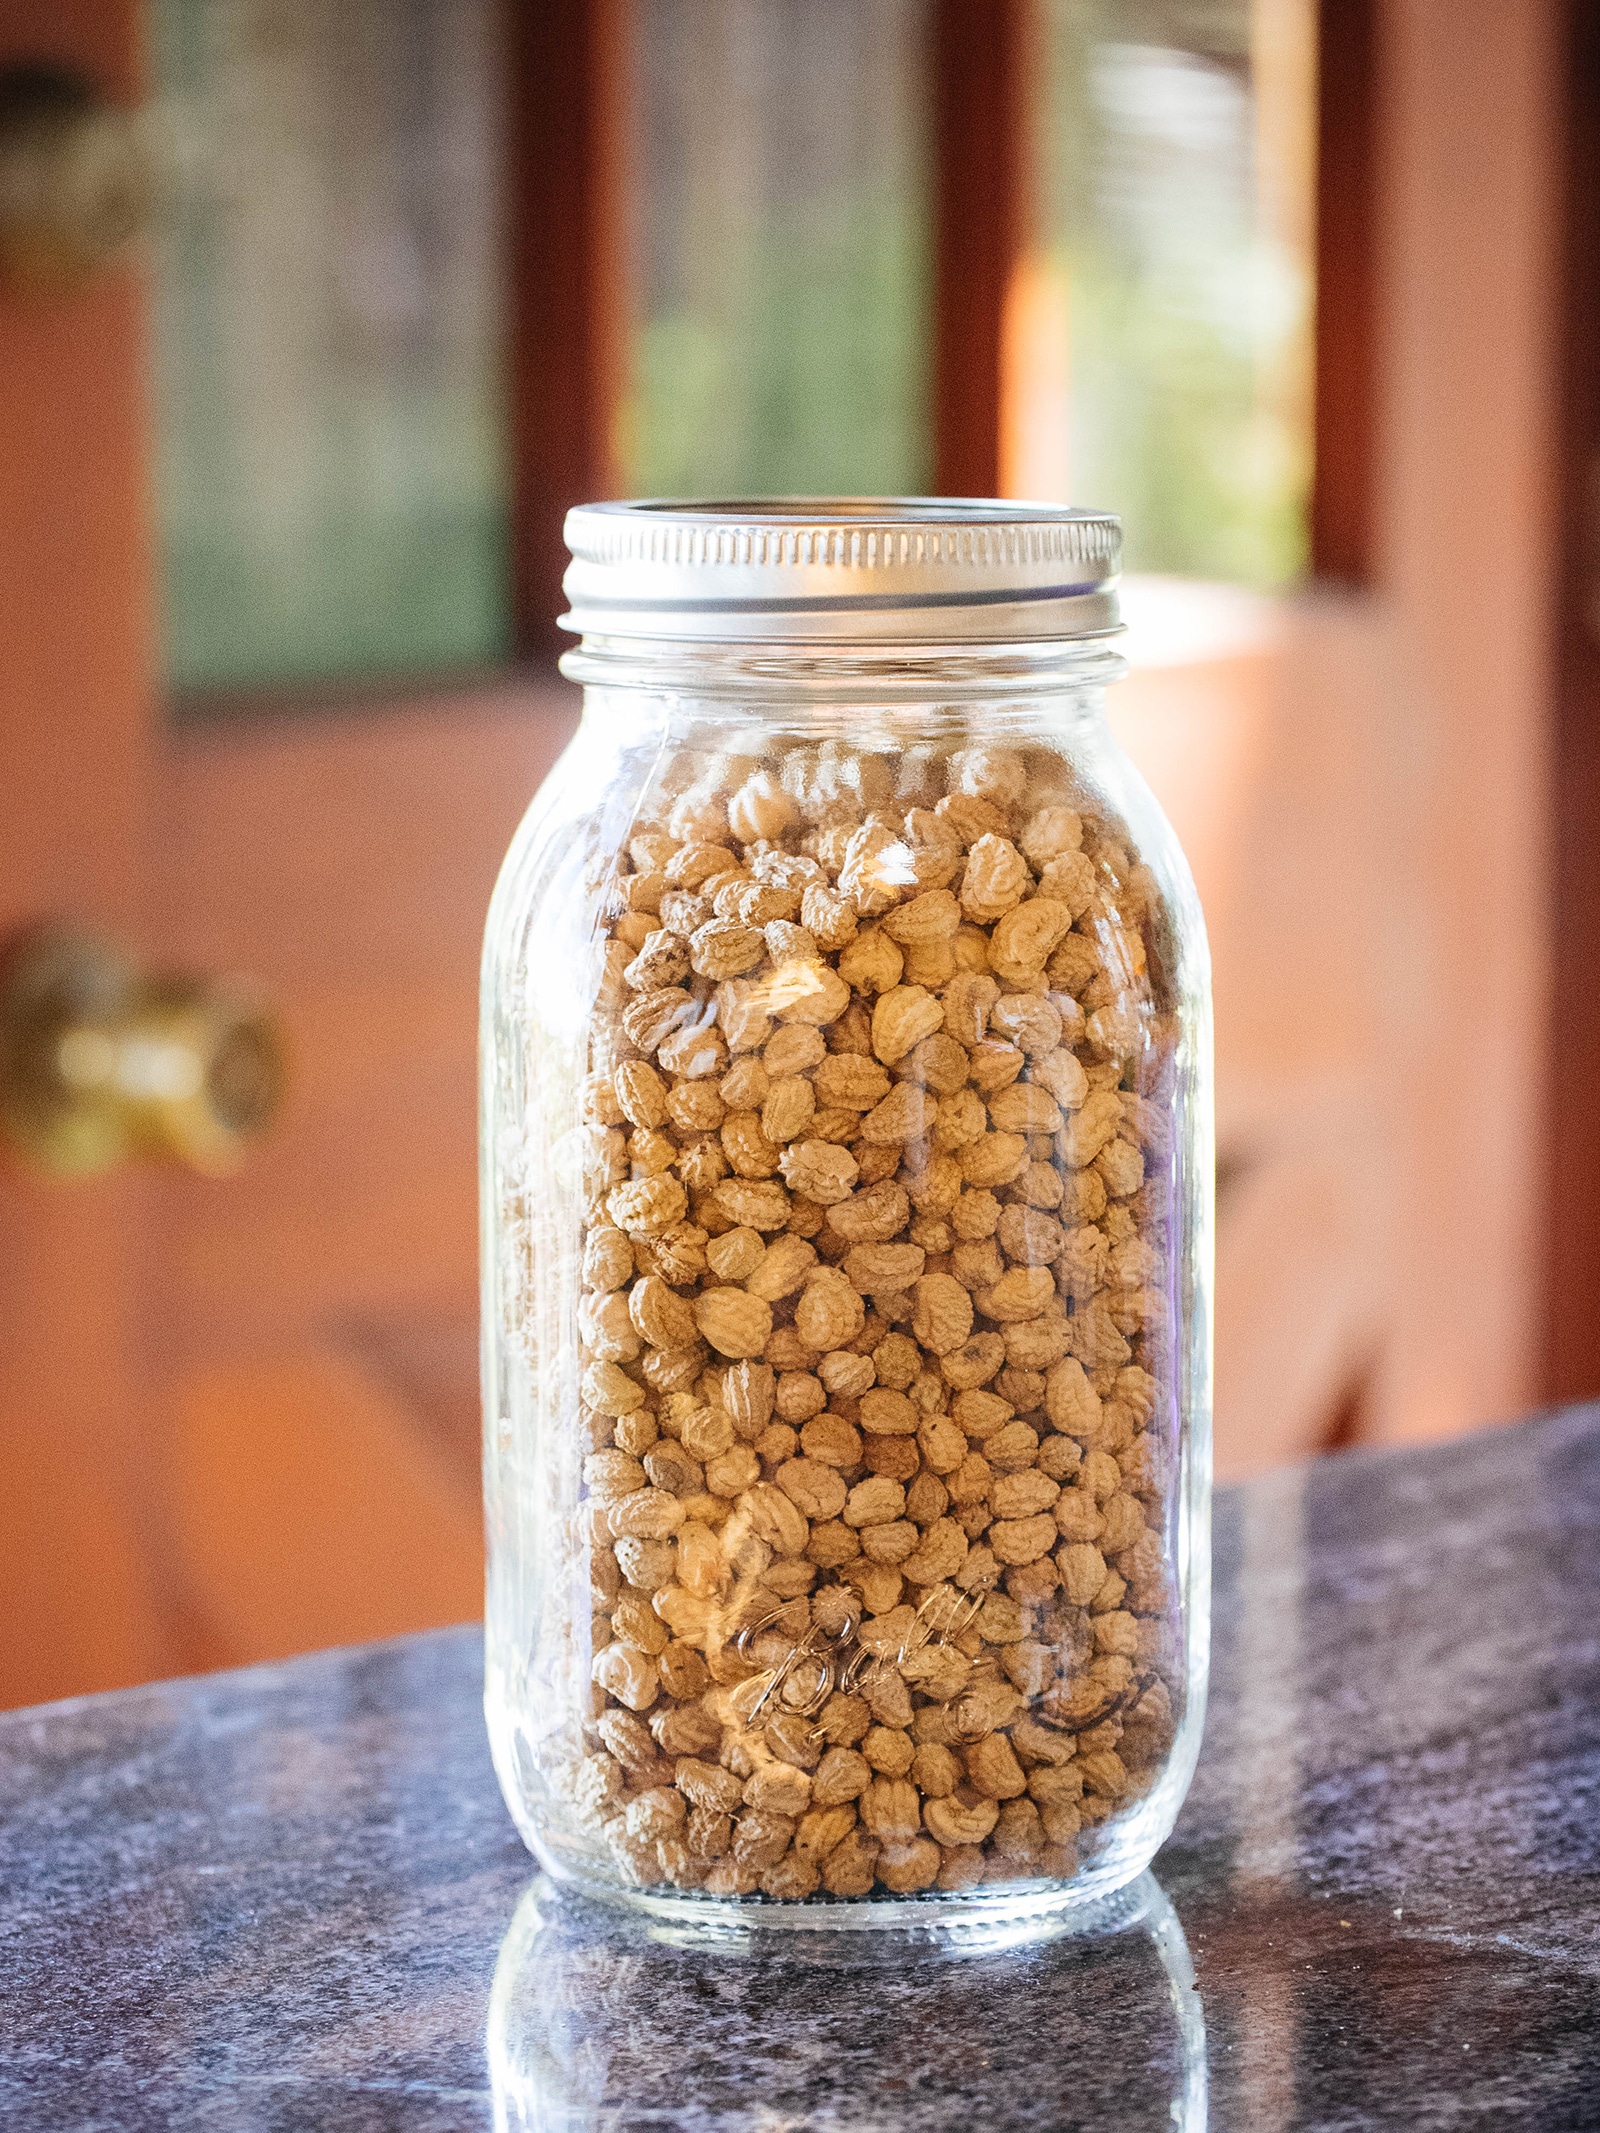 A glass jar on a counter filled with nasturtium seeds